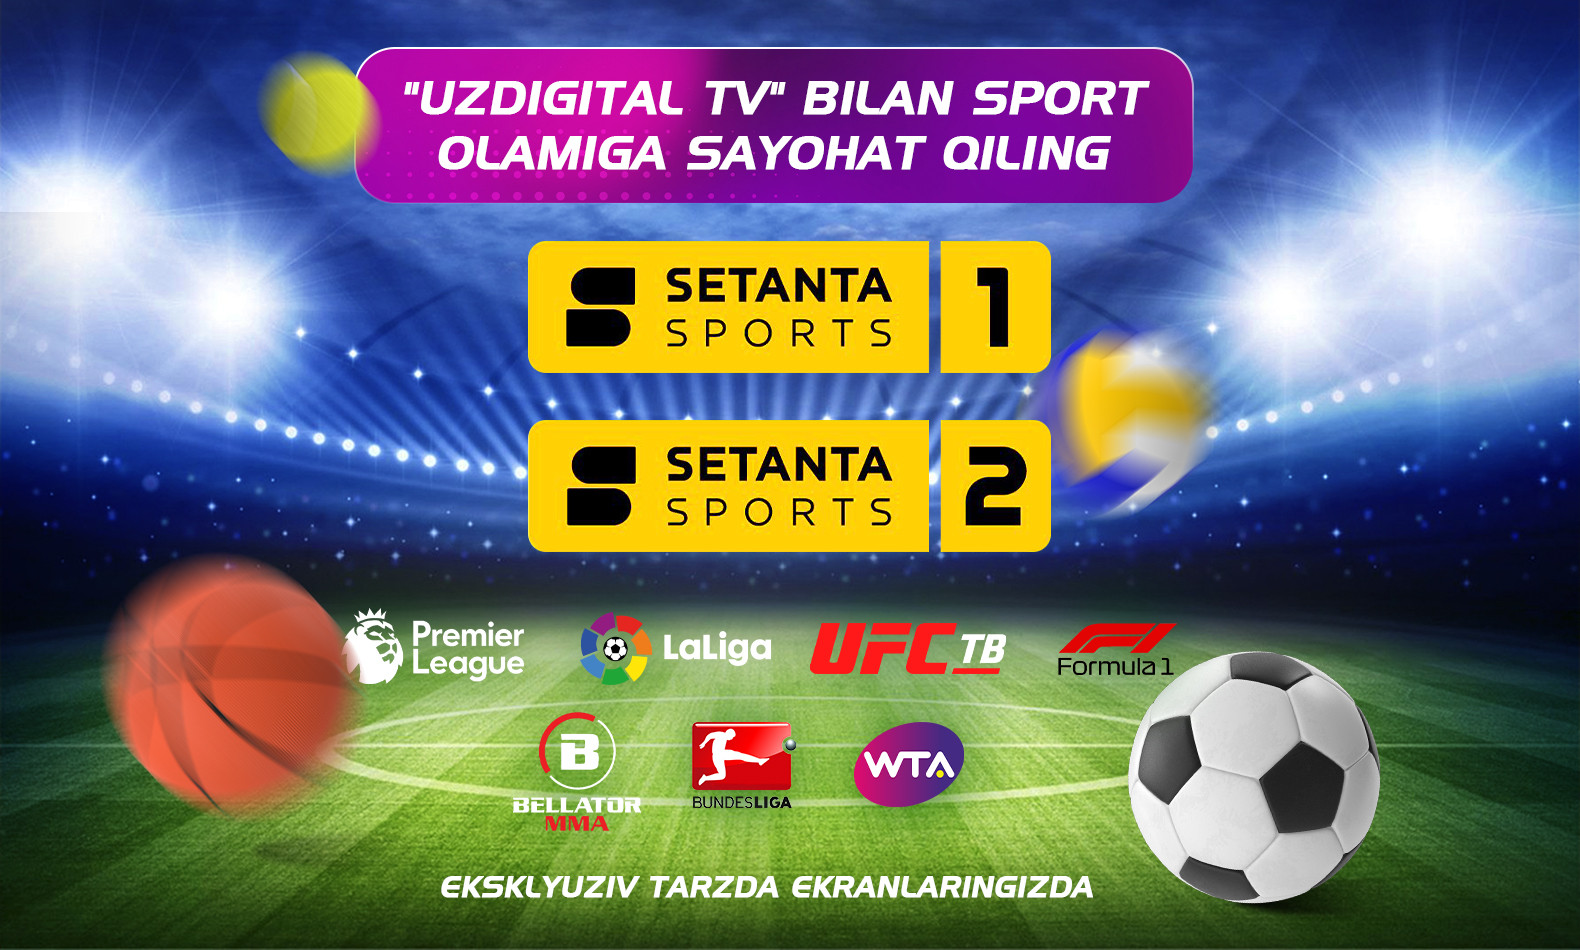 Setanta sports 1 программа. Setanta Sports 3. Setanta Sport all. Setanta Sports 1 2 logo. O'zbekiston telekanallari Sport.